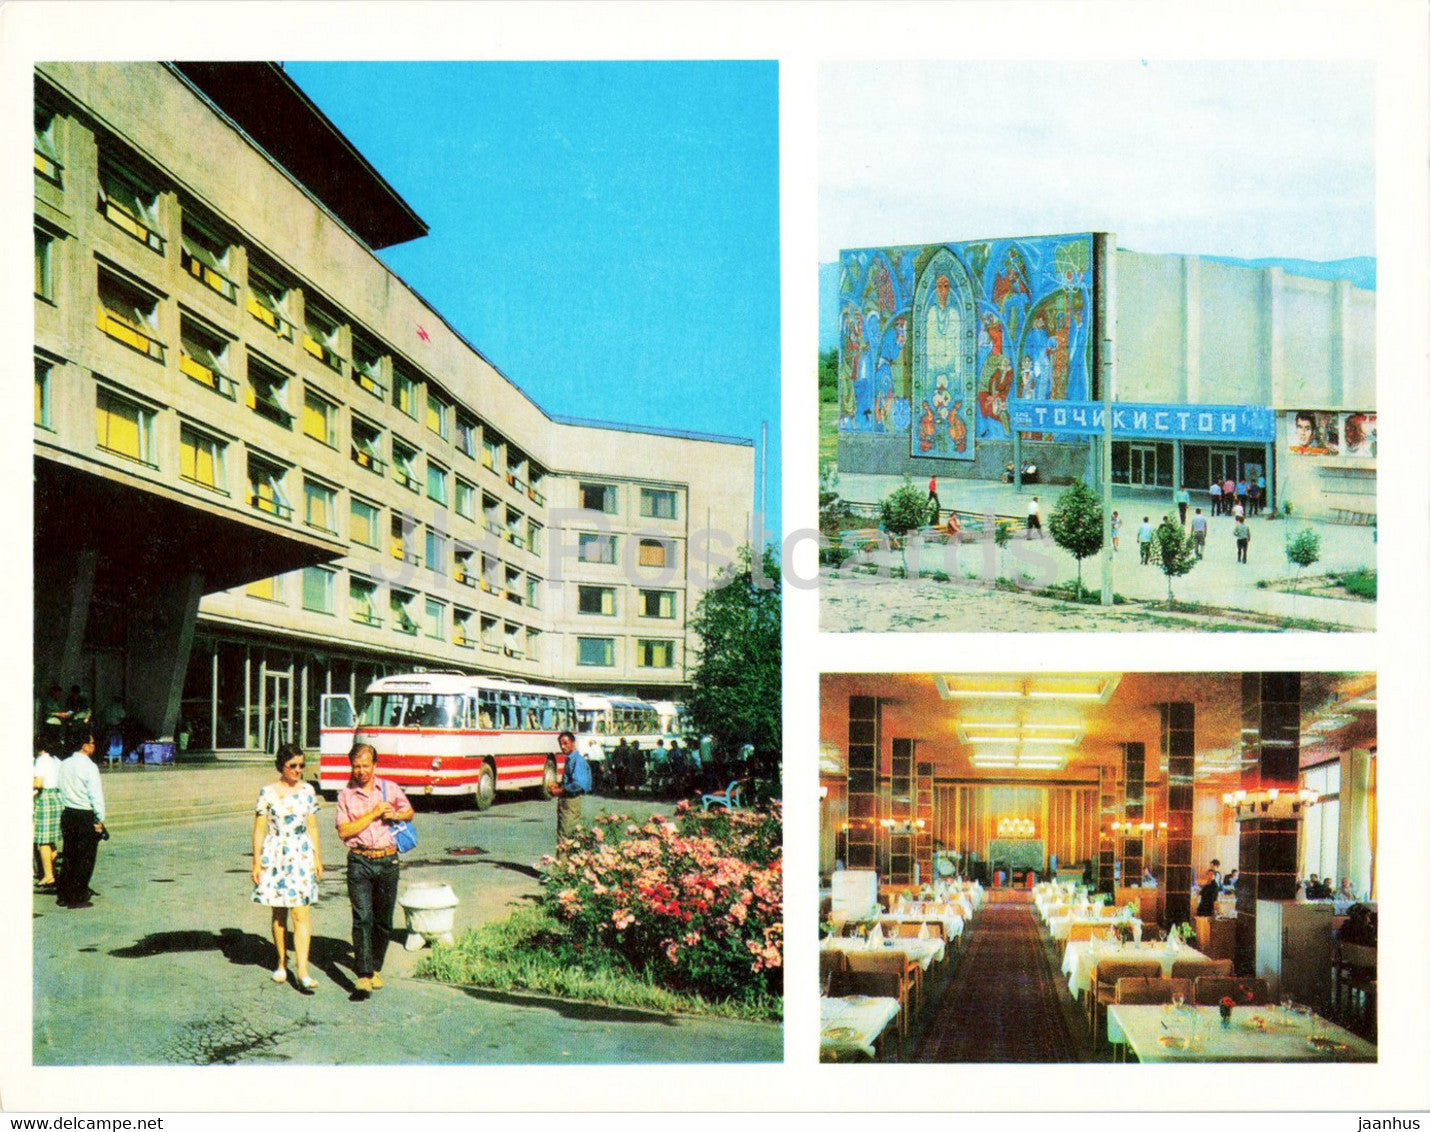 Dushanbe - hotel Dushanbe - cinema Tajikistan - restaurant Dushanbe - bus - 1974 - Tajikistan USSR - unused - JH Postcards